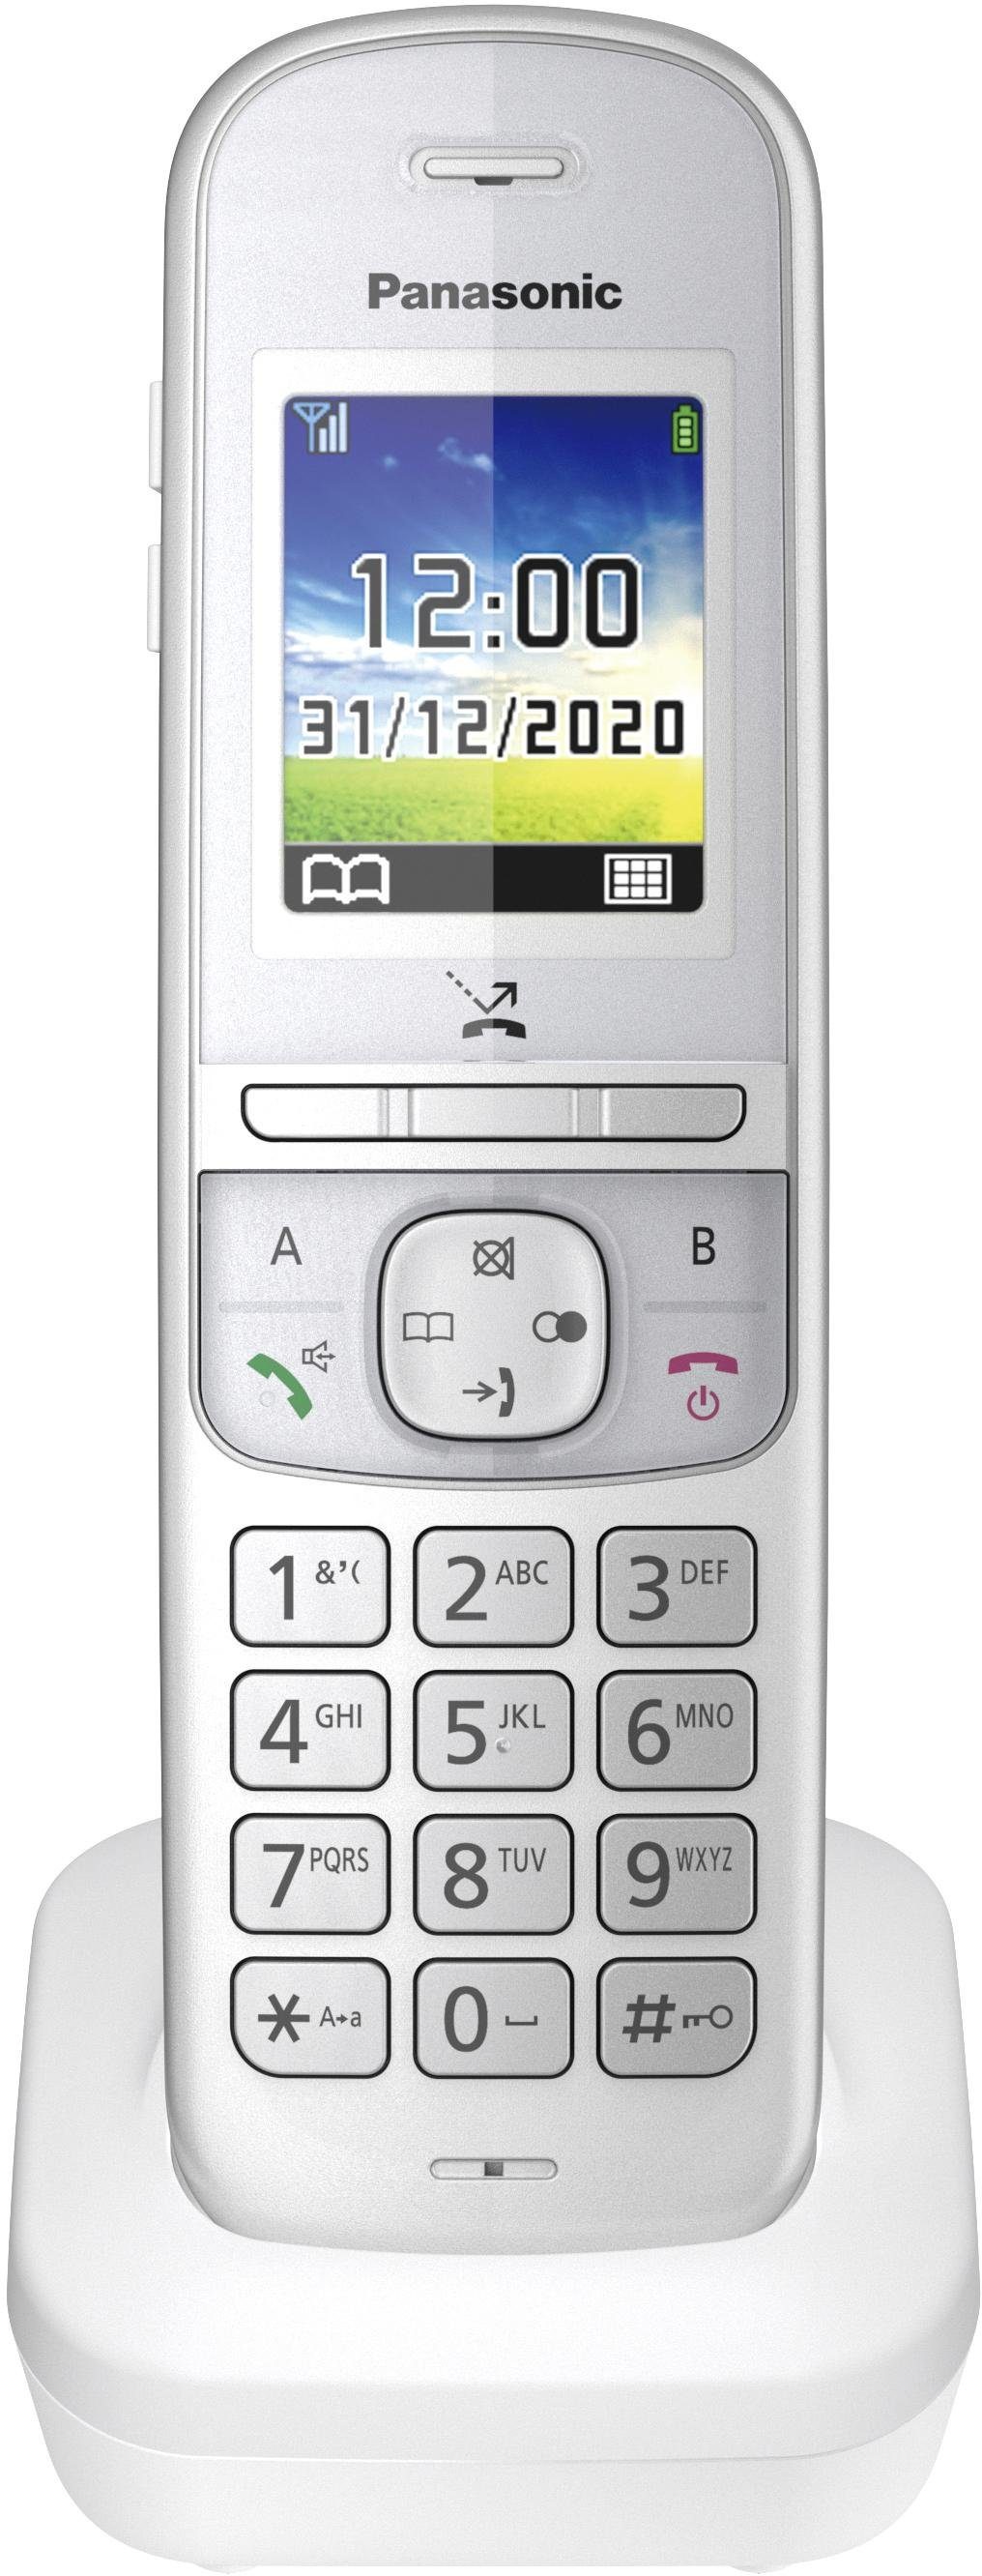 Panasonic KX-TGH722 perlsilber Anrufbeantworter) 2, (Mobilteile: Schnurloses Duo DECT-Telefon mit